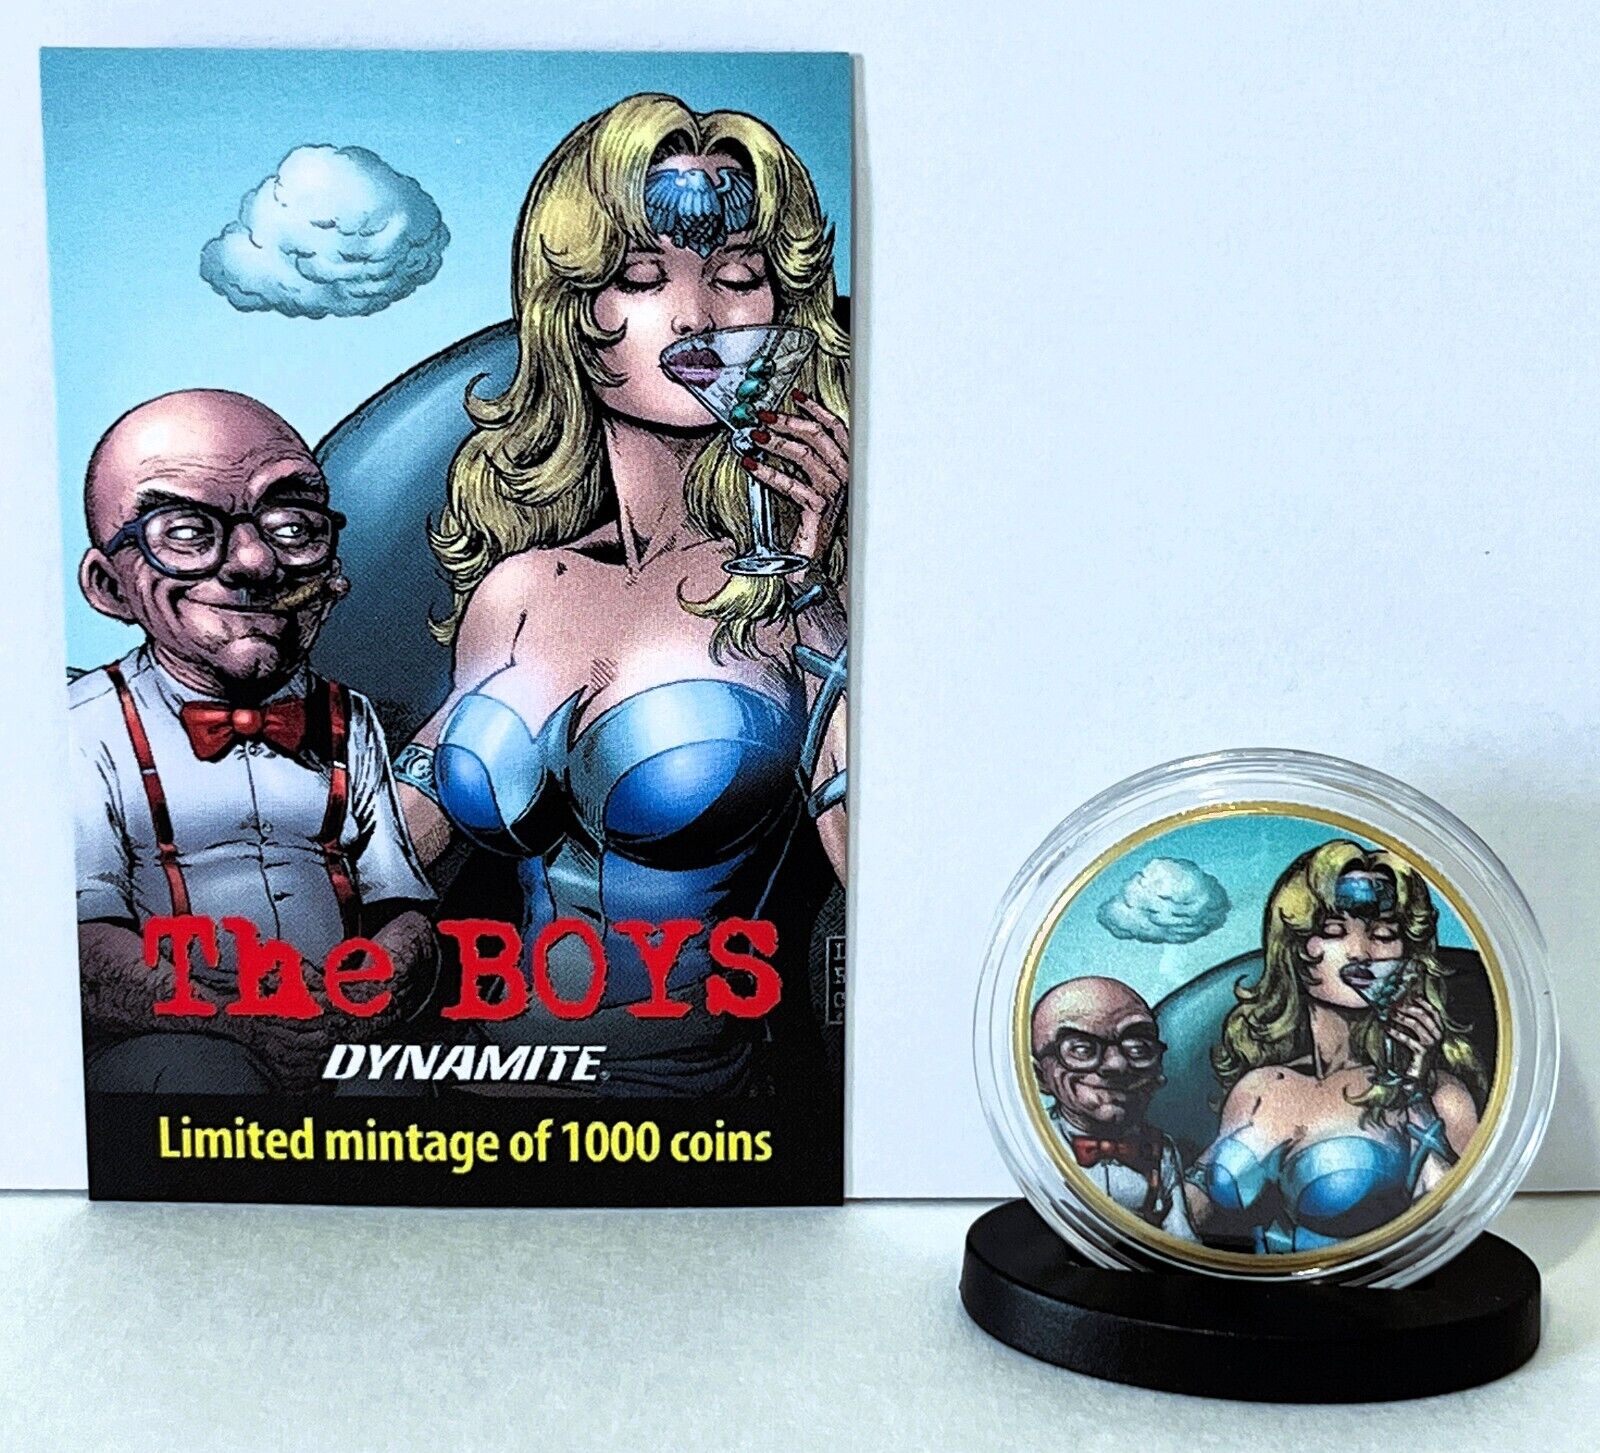 The Boys Collectible Gold Plated Half Dollar Coin - Ltd (1000) BAM Box Dynamite